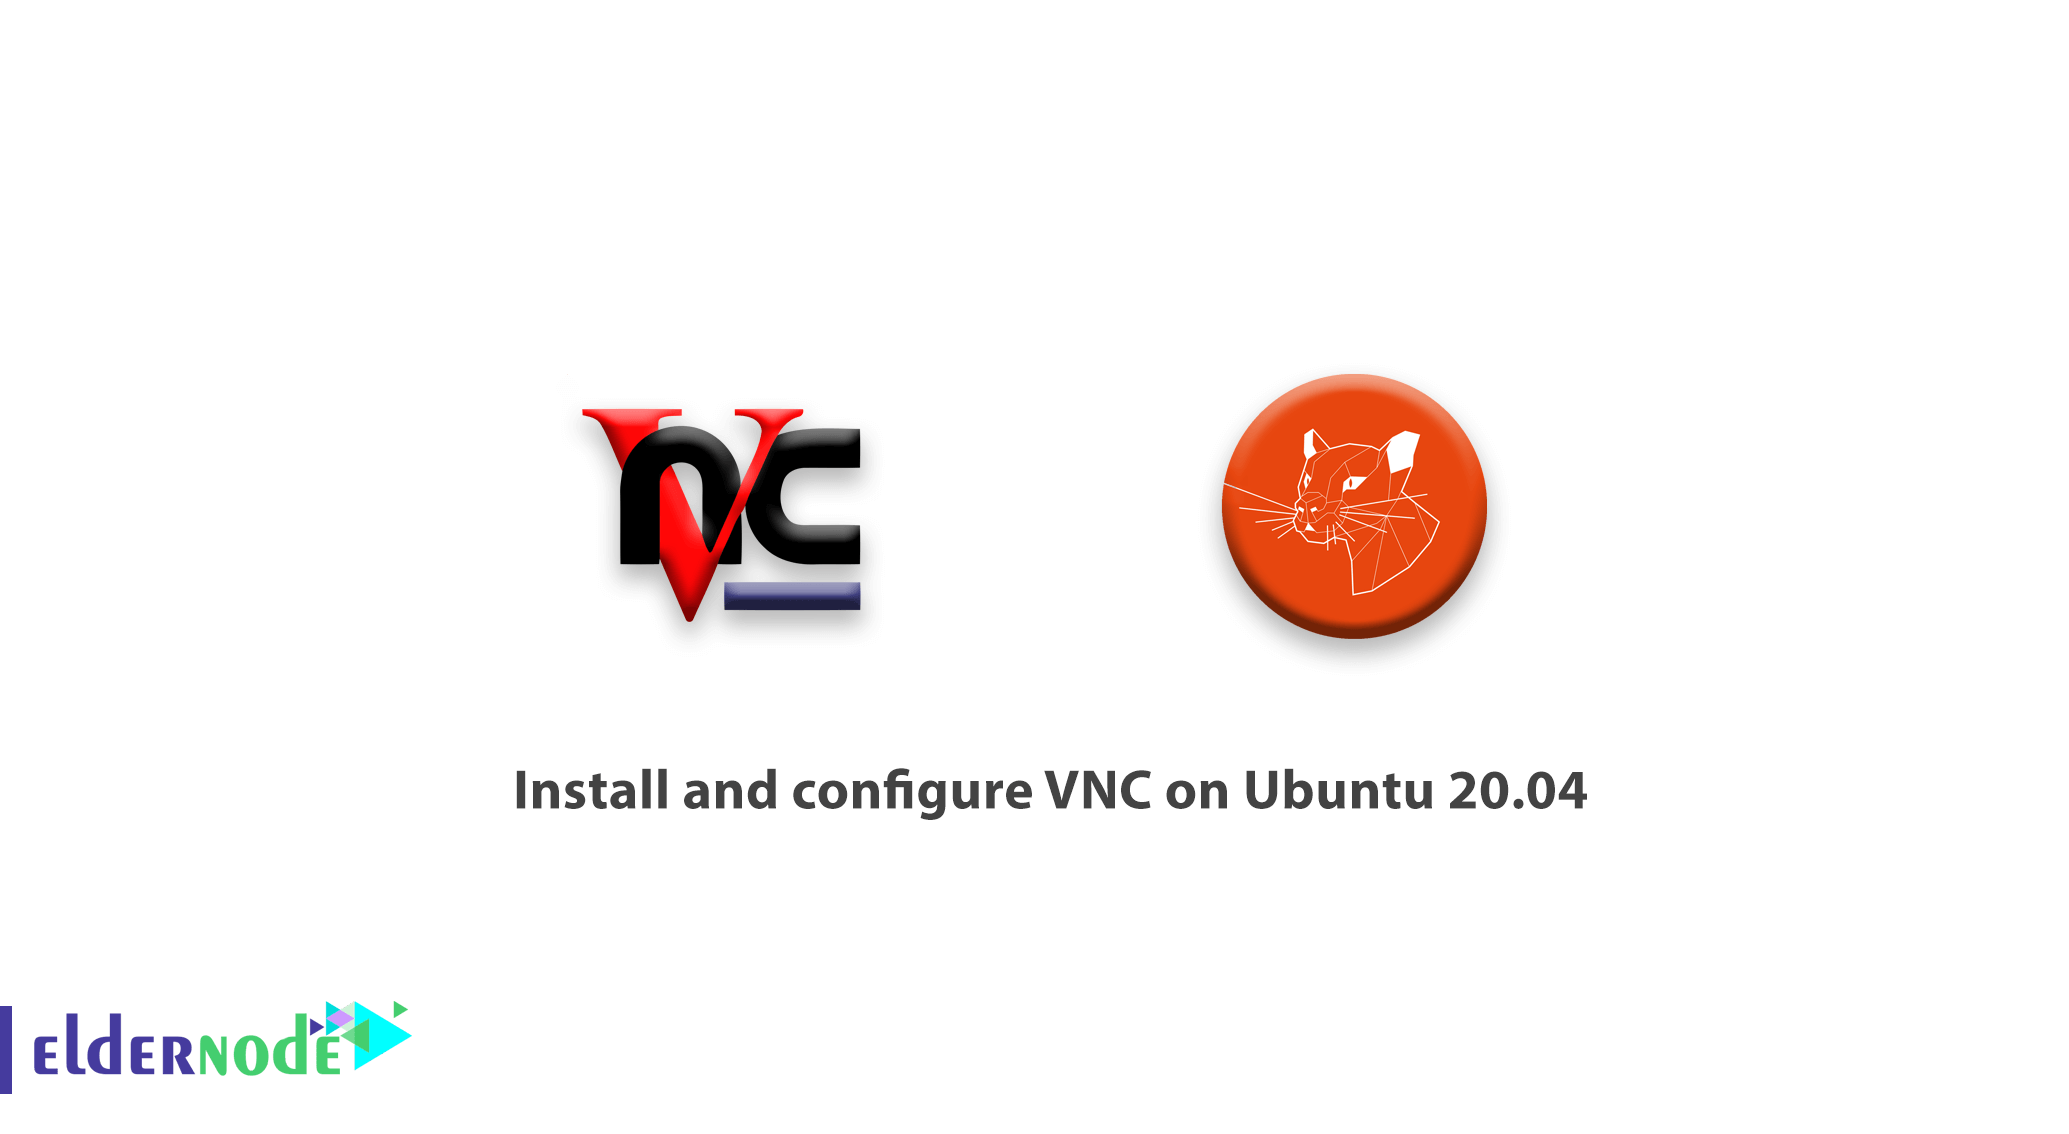 vnc viewer for ubuntu 20.04